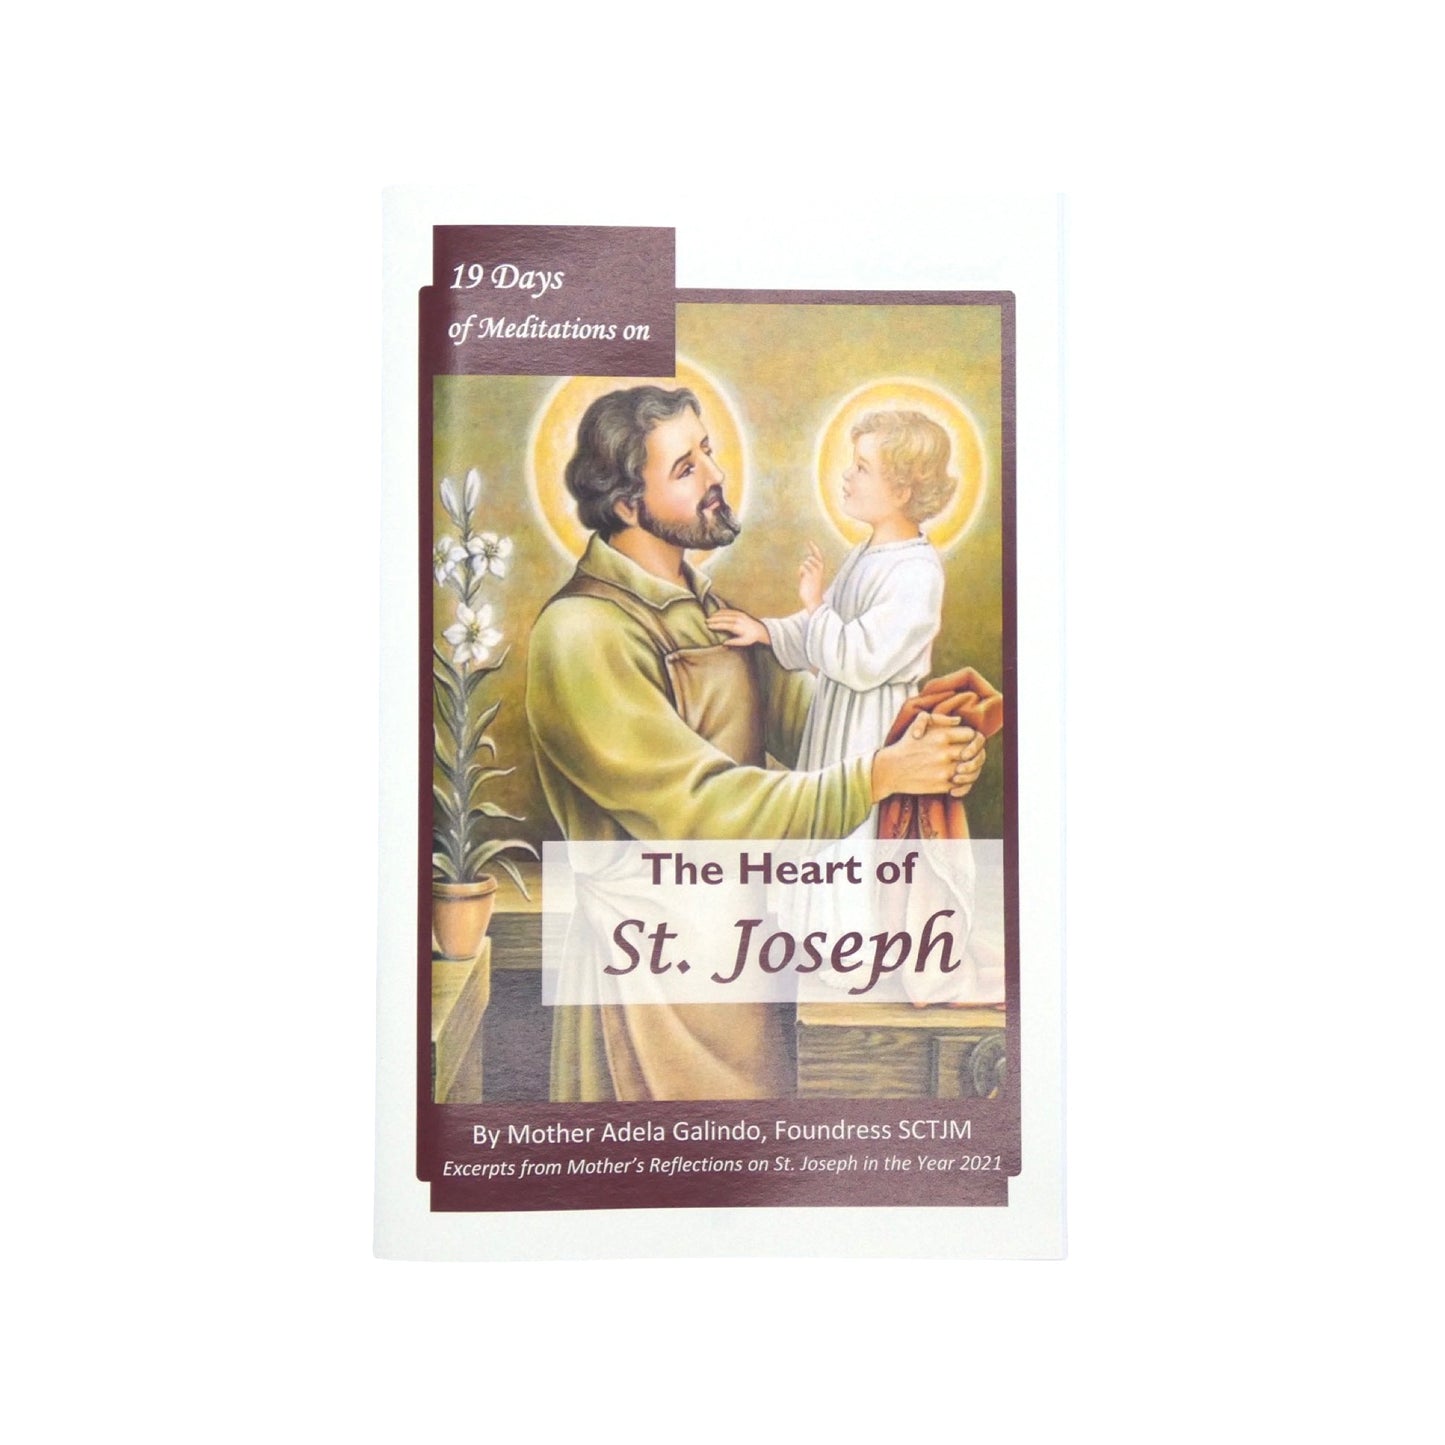 19 Days of Meditations on "The Heart of St. Joseph" by Mother Adela, SCTJM Foundress